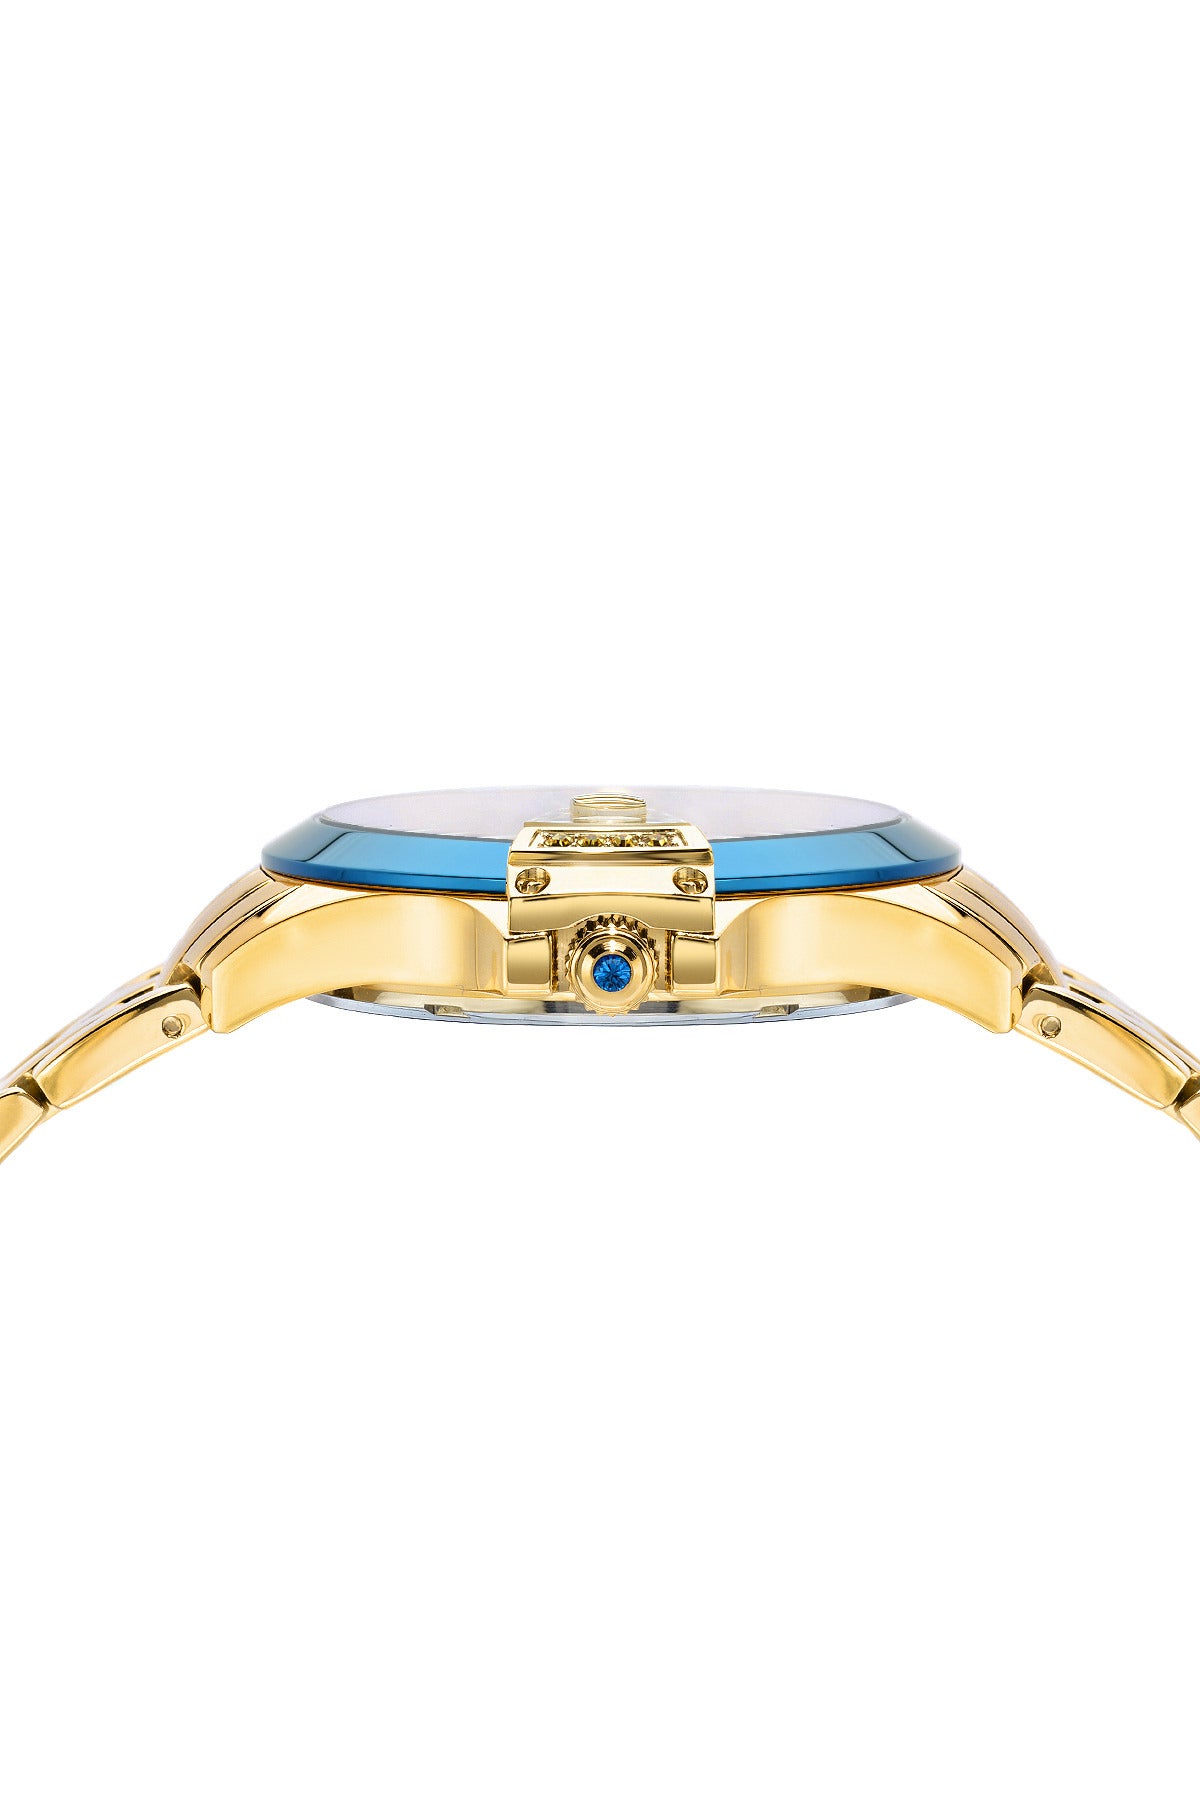 Porsamo Bleu Olivia luxury women's stainless steel watch, gold, blue 982BOLS